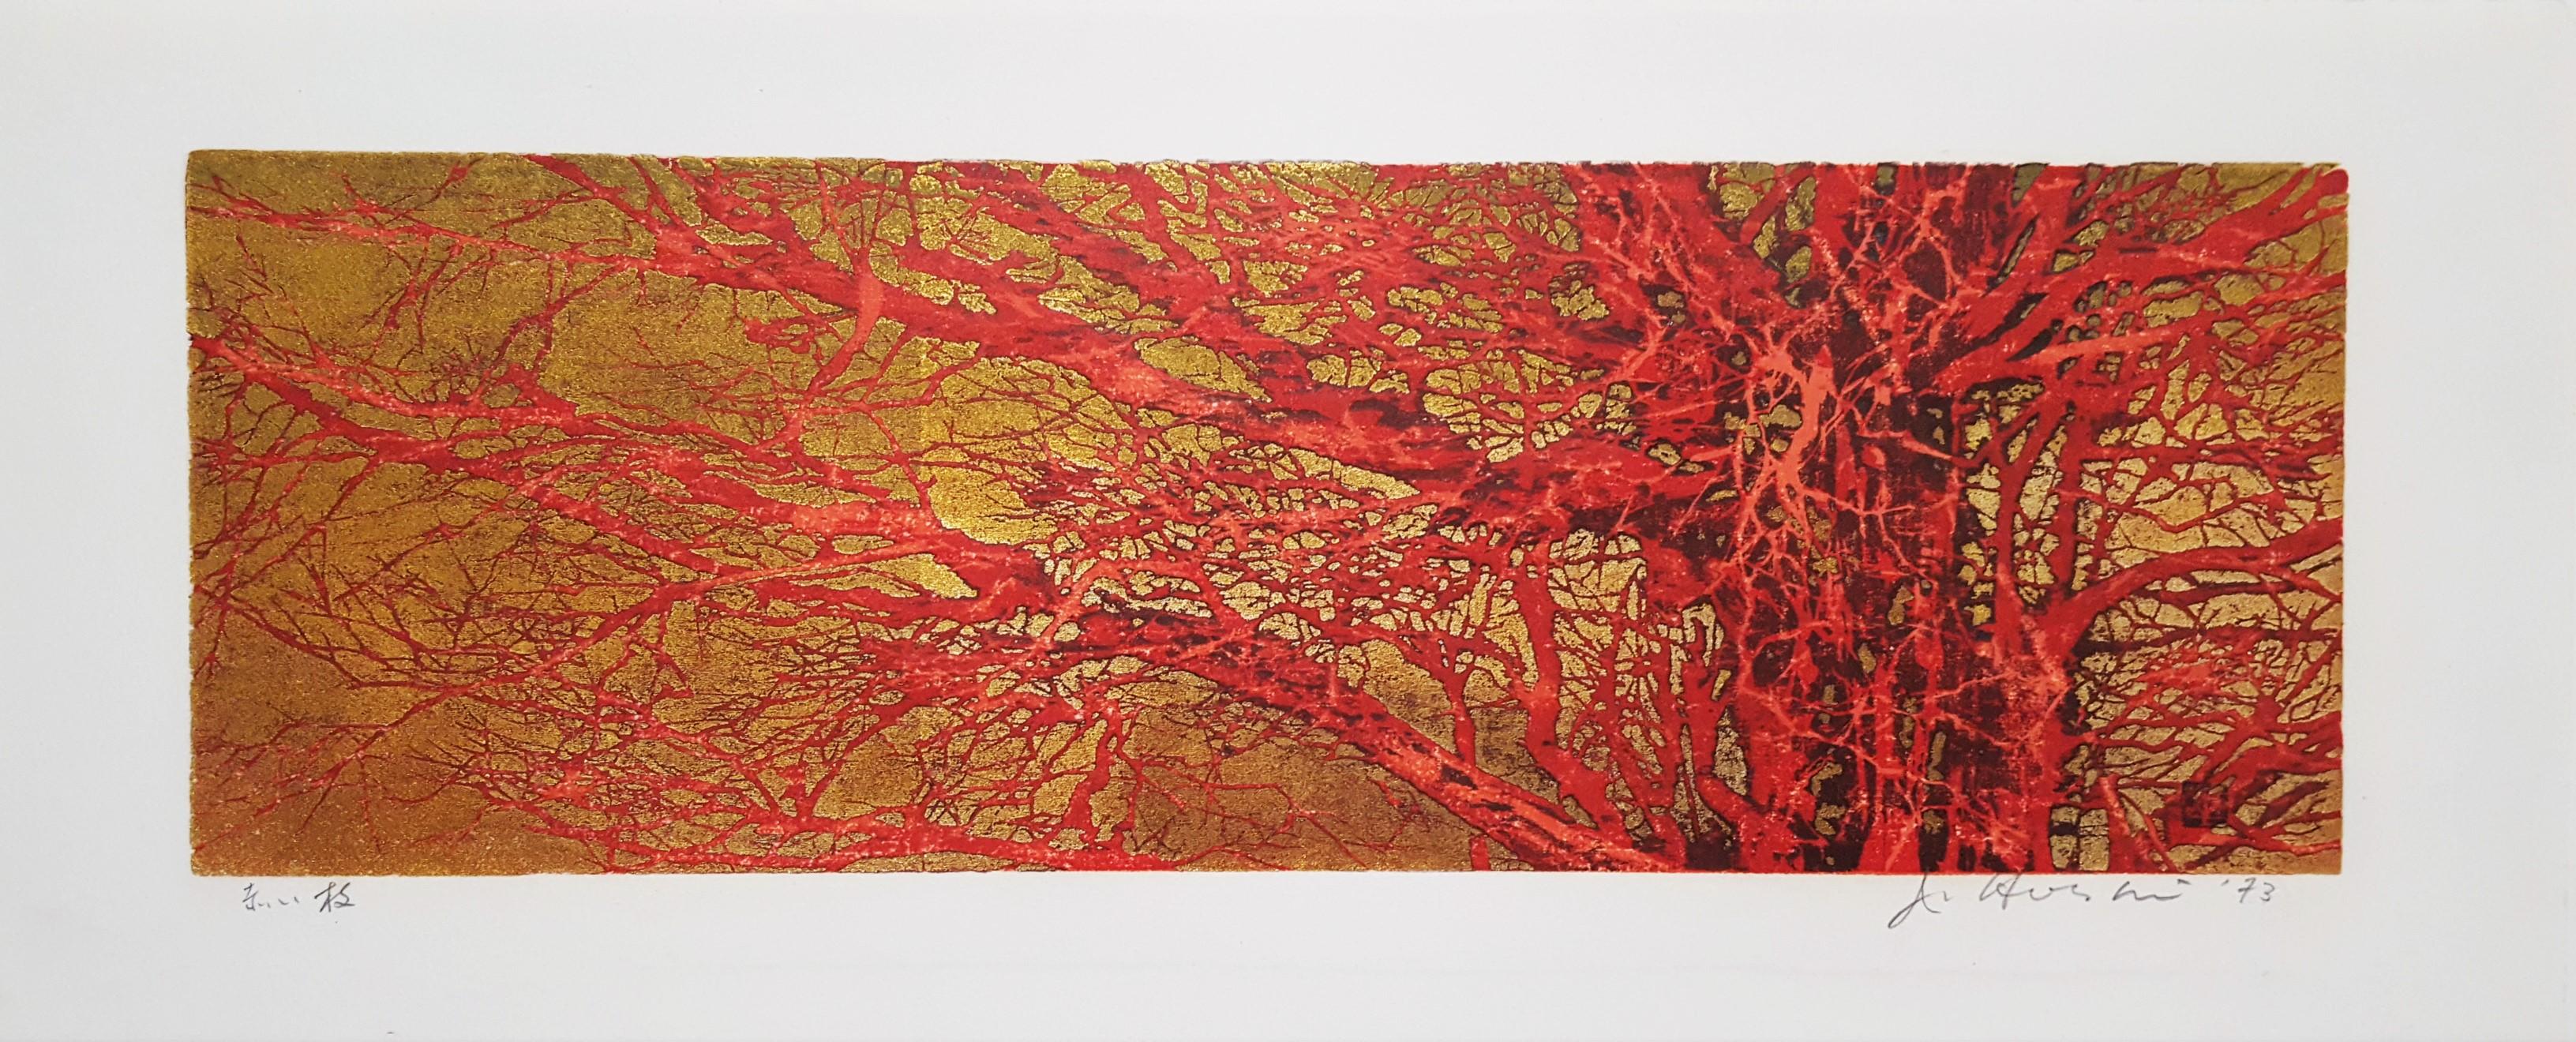 Red Branches (Akai eda) - Print by Joichi Hoshi